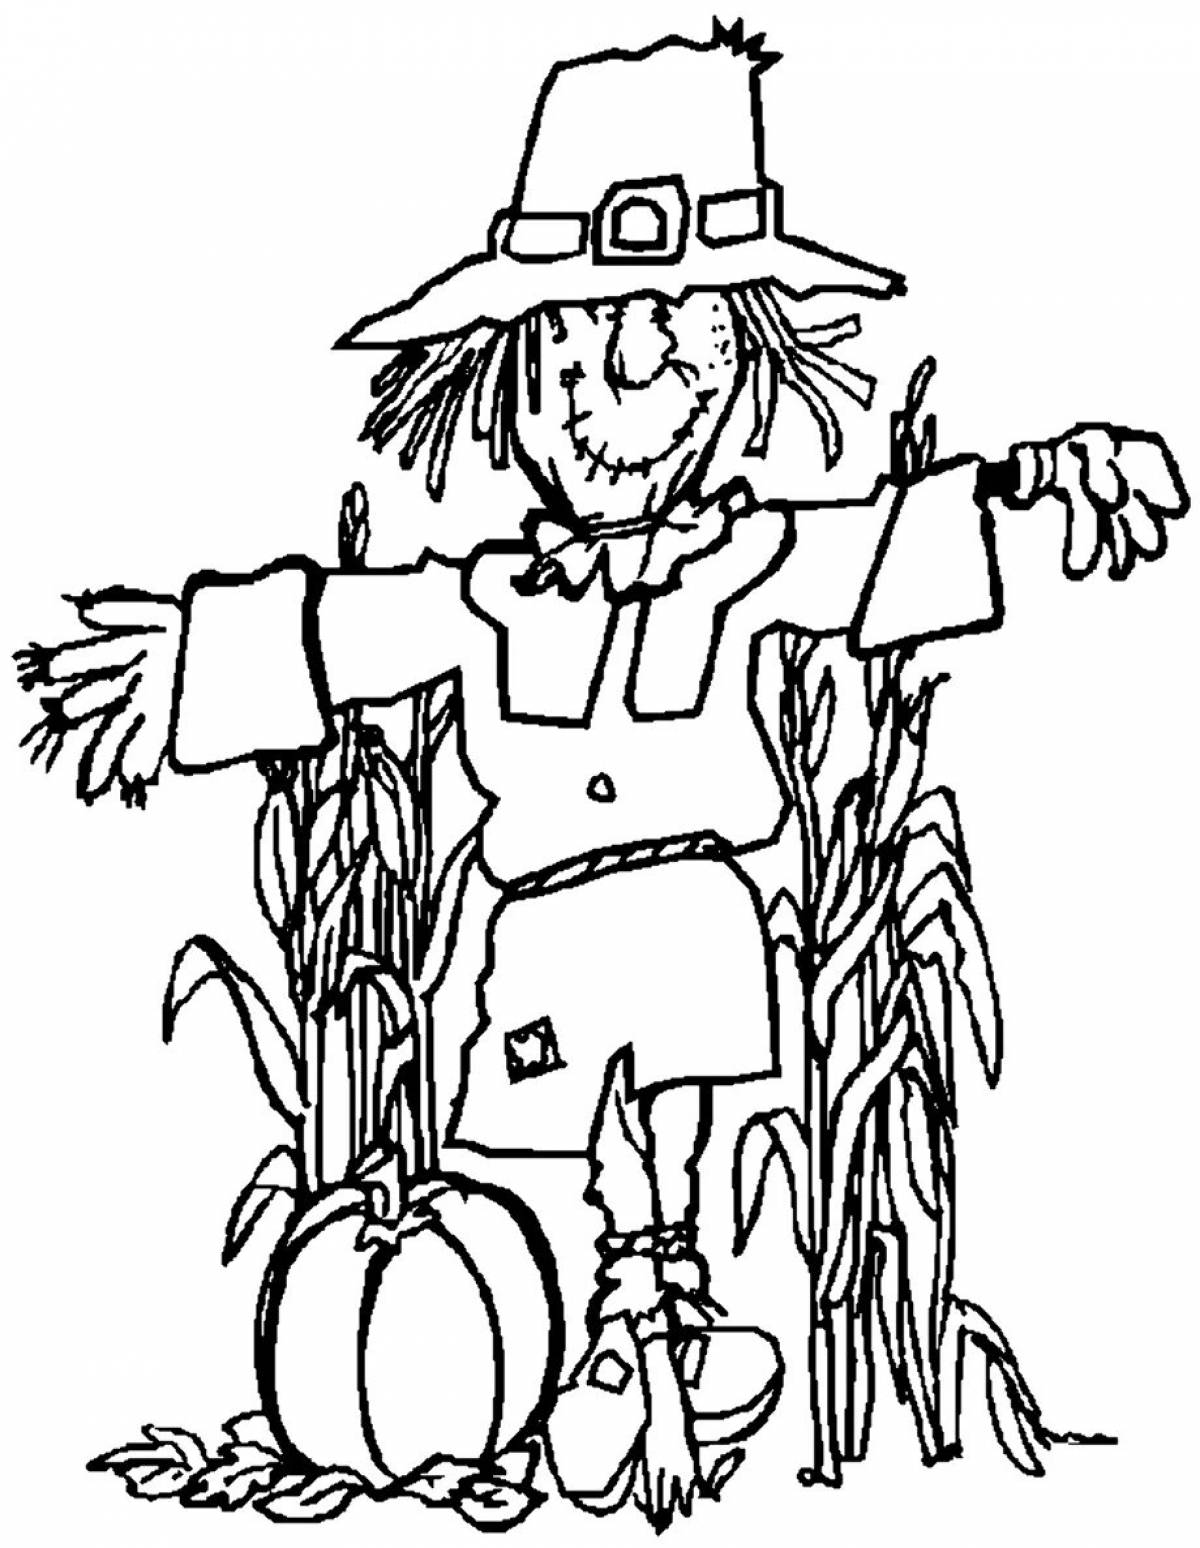 Scarecrow #15